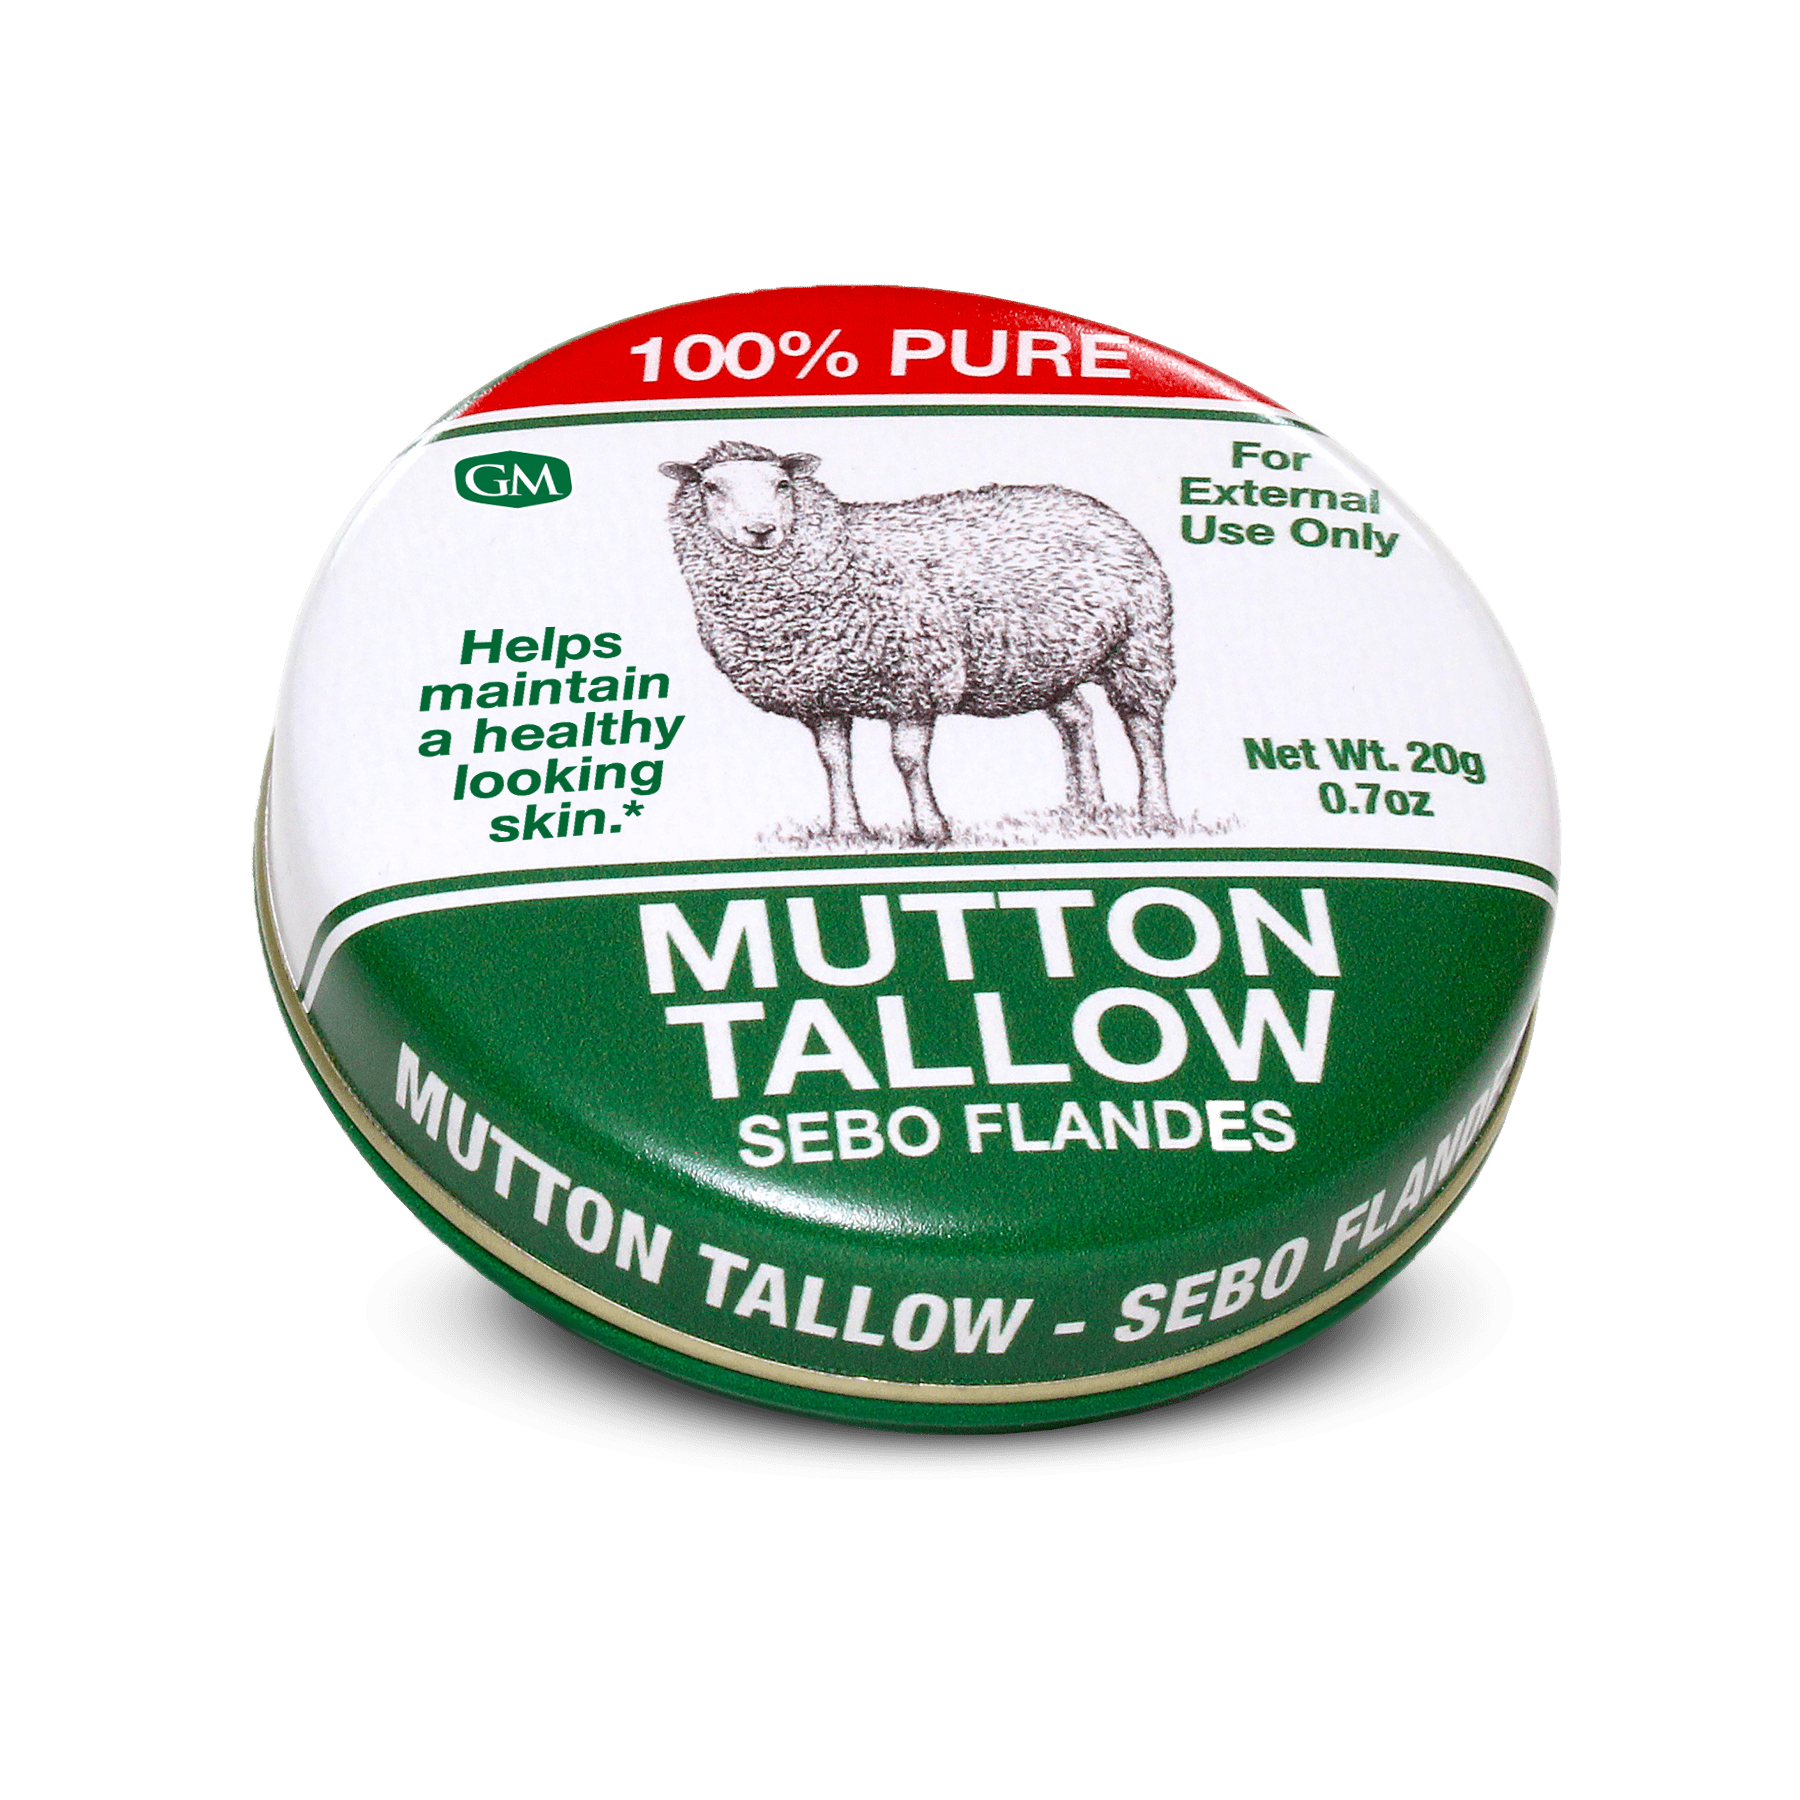 Germa 100% Pure Mutton Tallow. Sebo Flandes, 0.7 oz